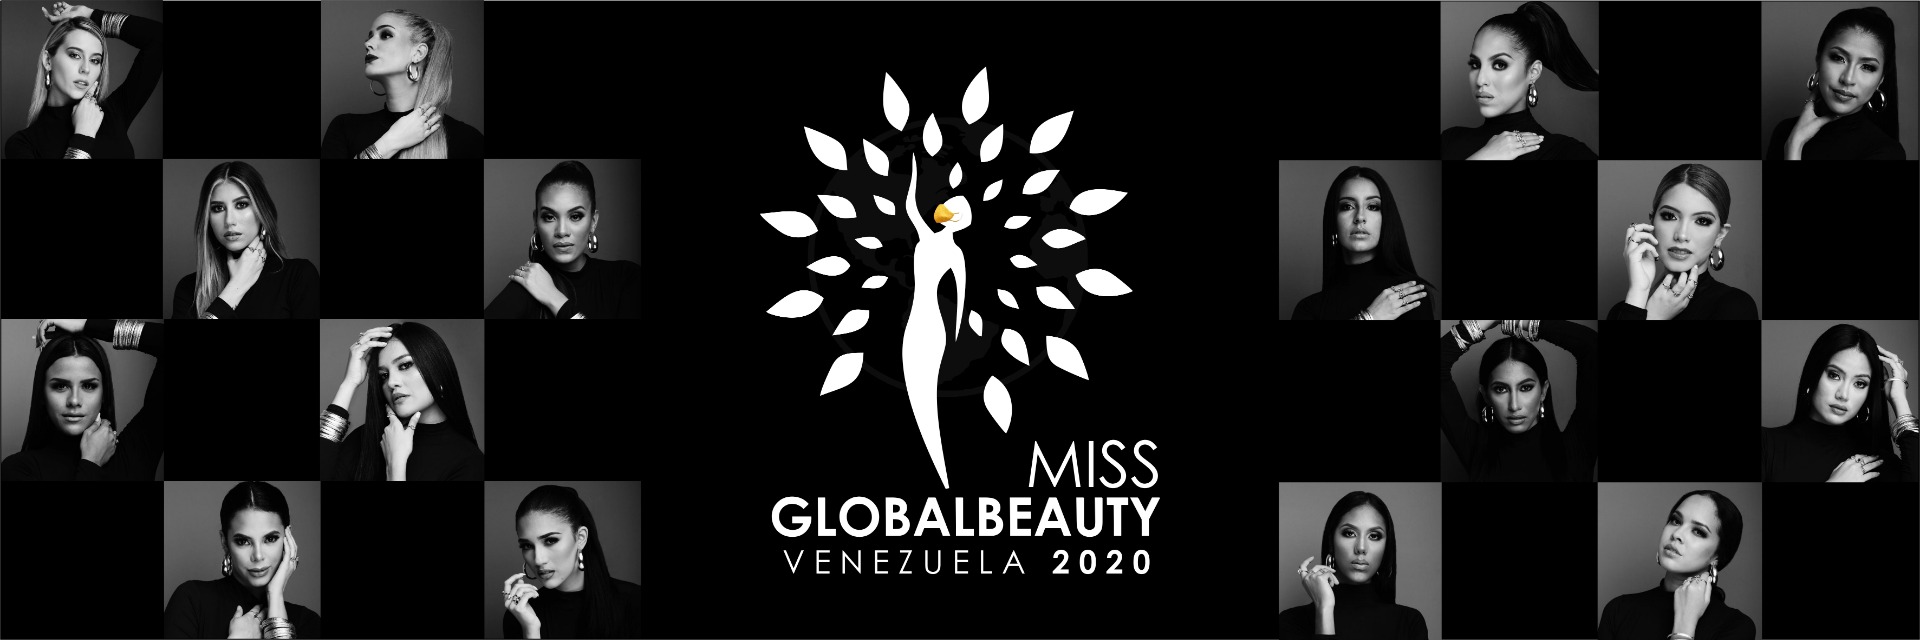 CANDIDATAS OFICIALES AL MISS GLOBALBEAUTY VENEZUELA 2020